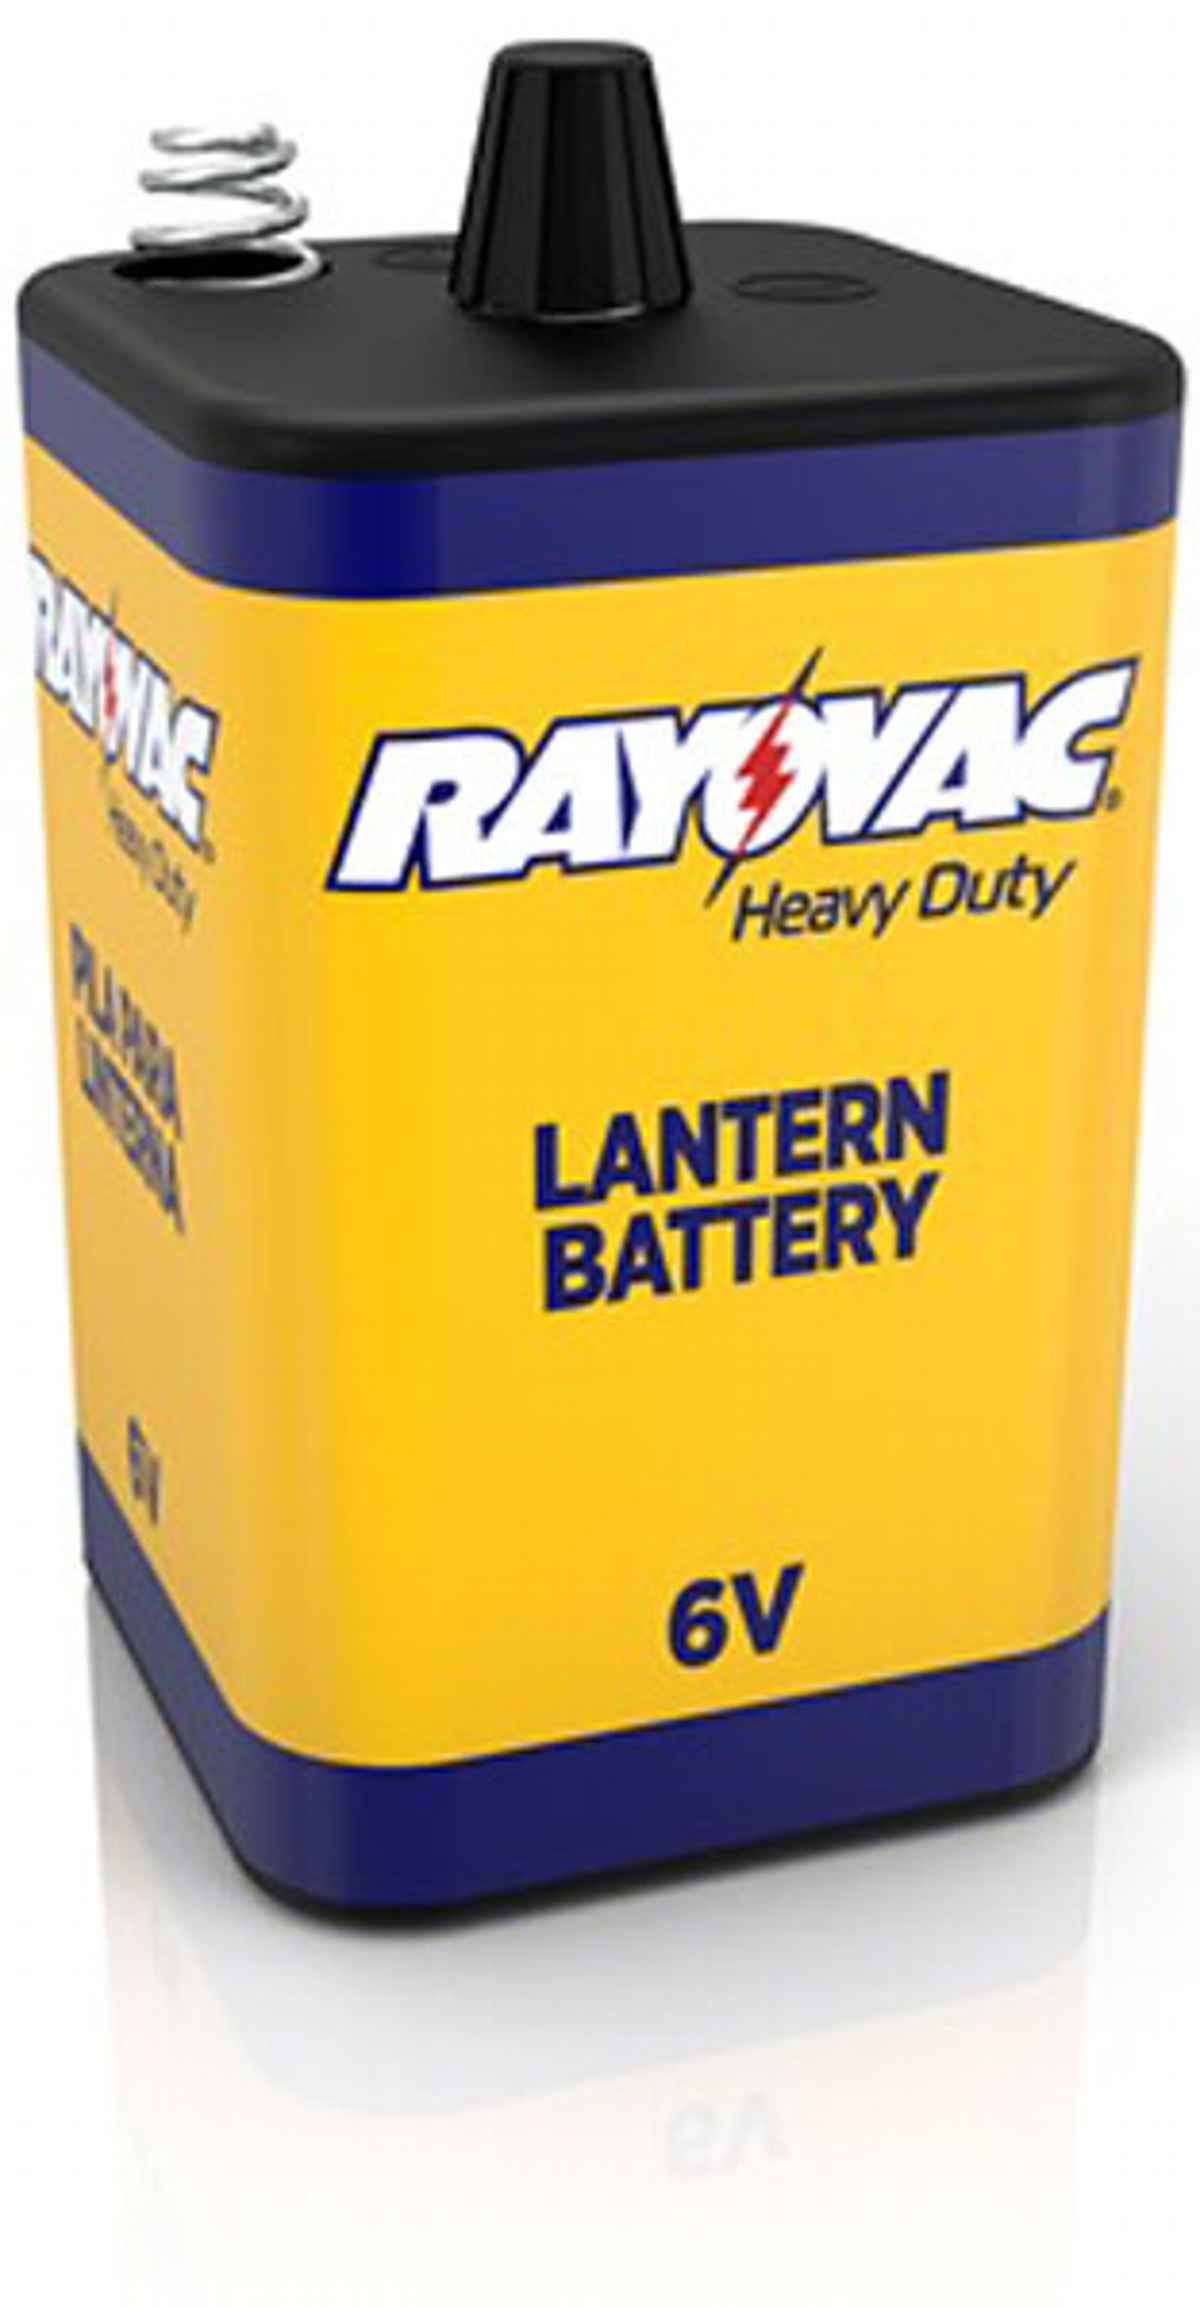 Rayovac Heavy Duty Lantern Battery - 6V